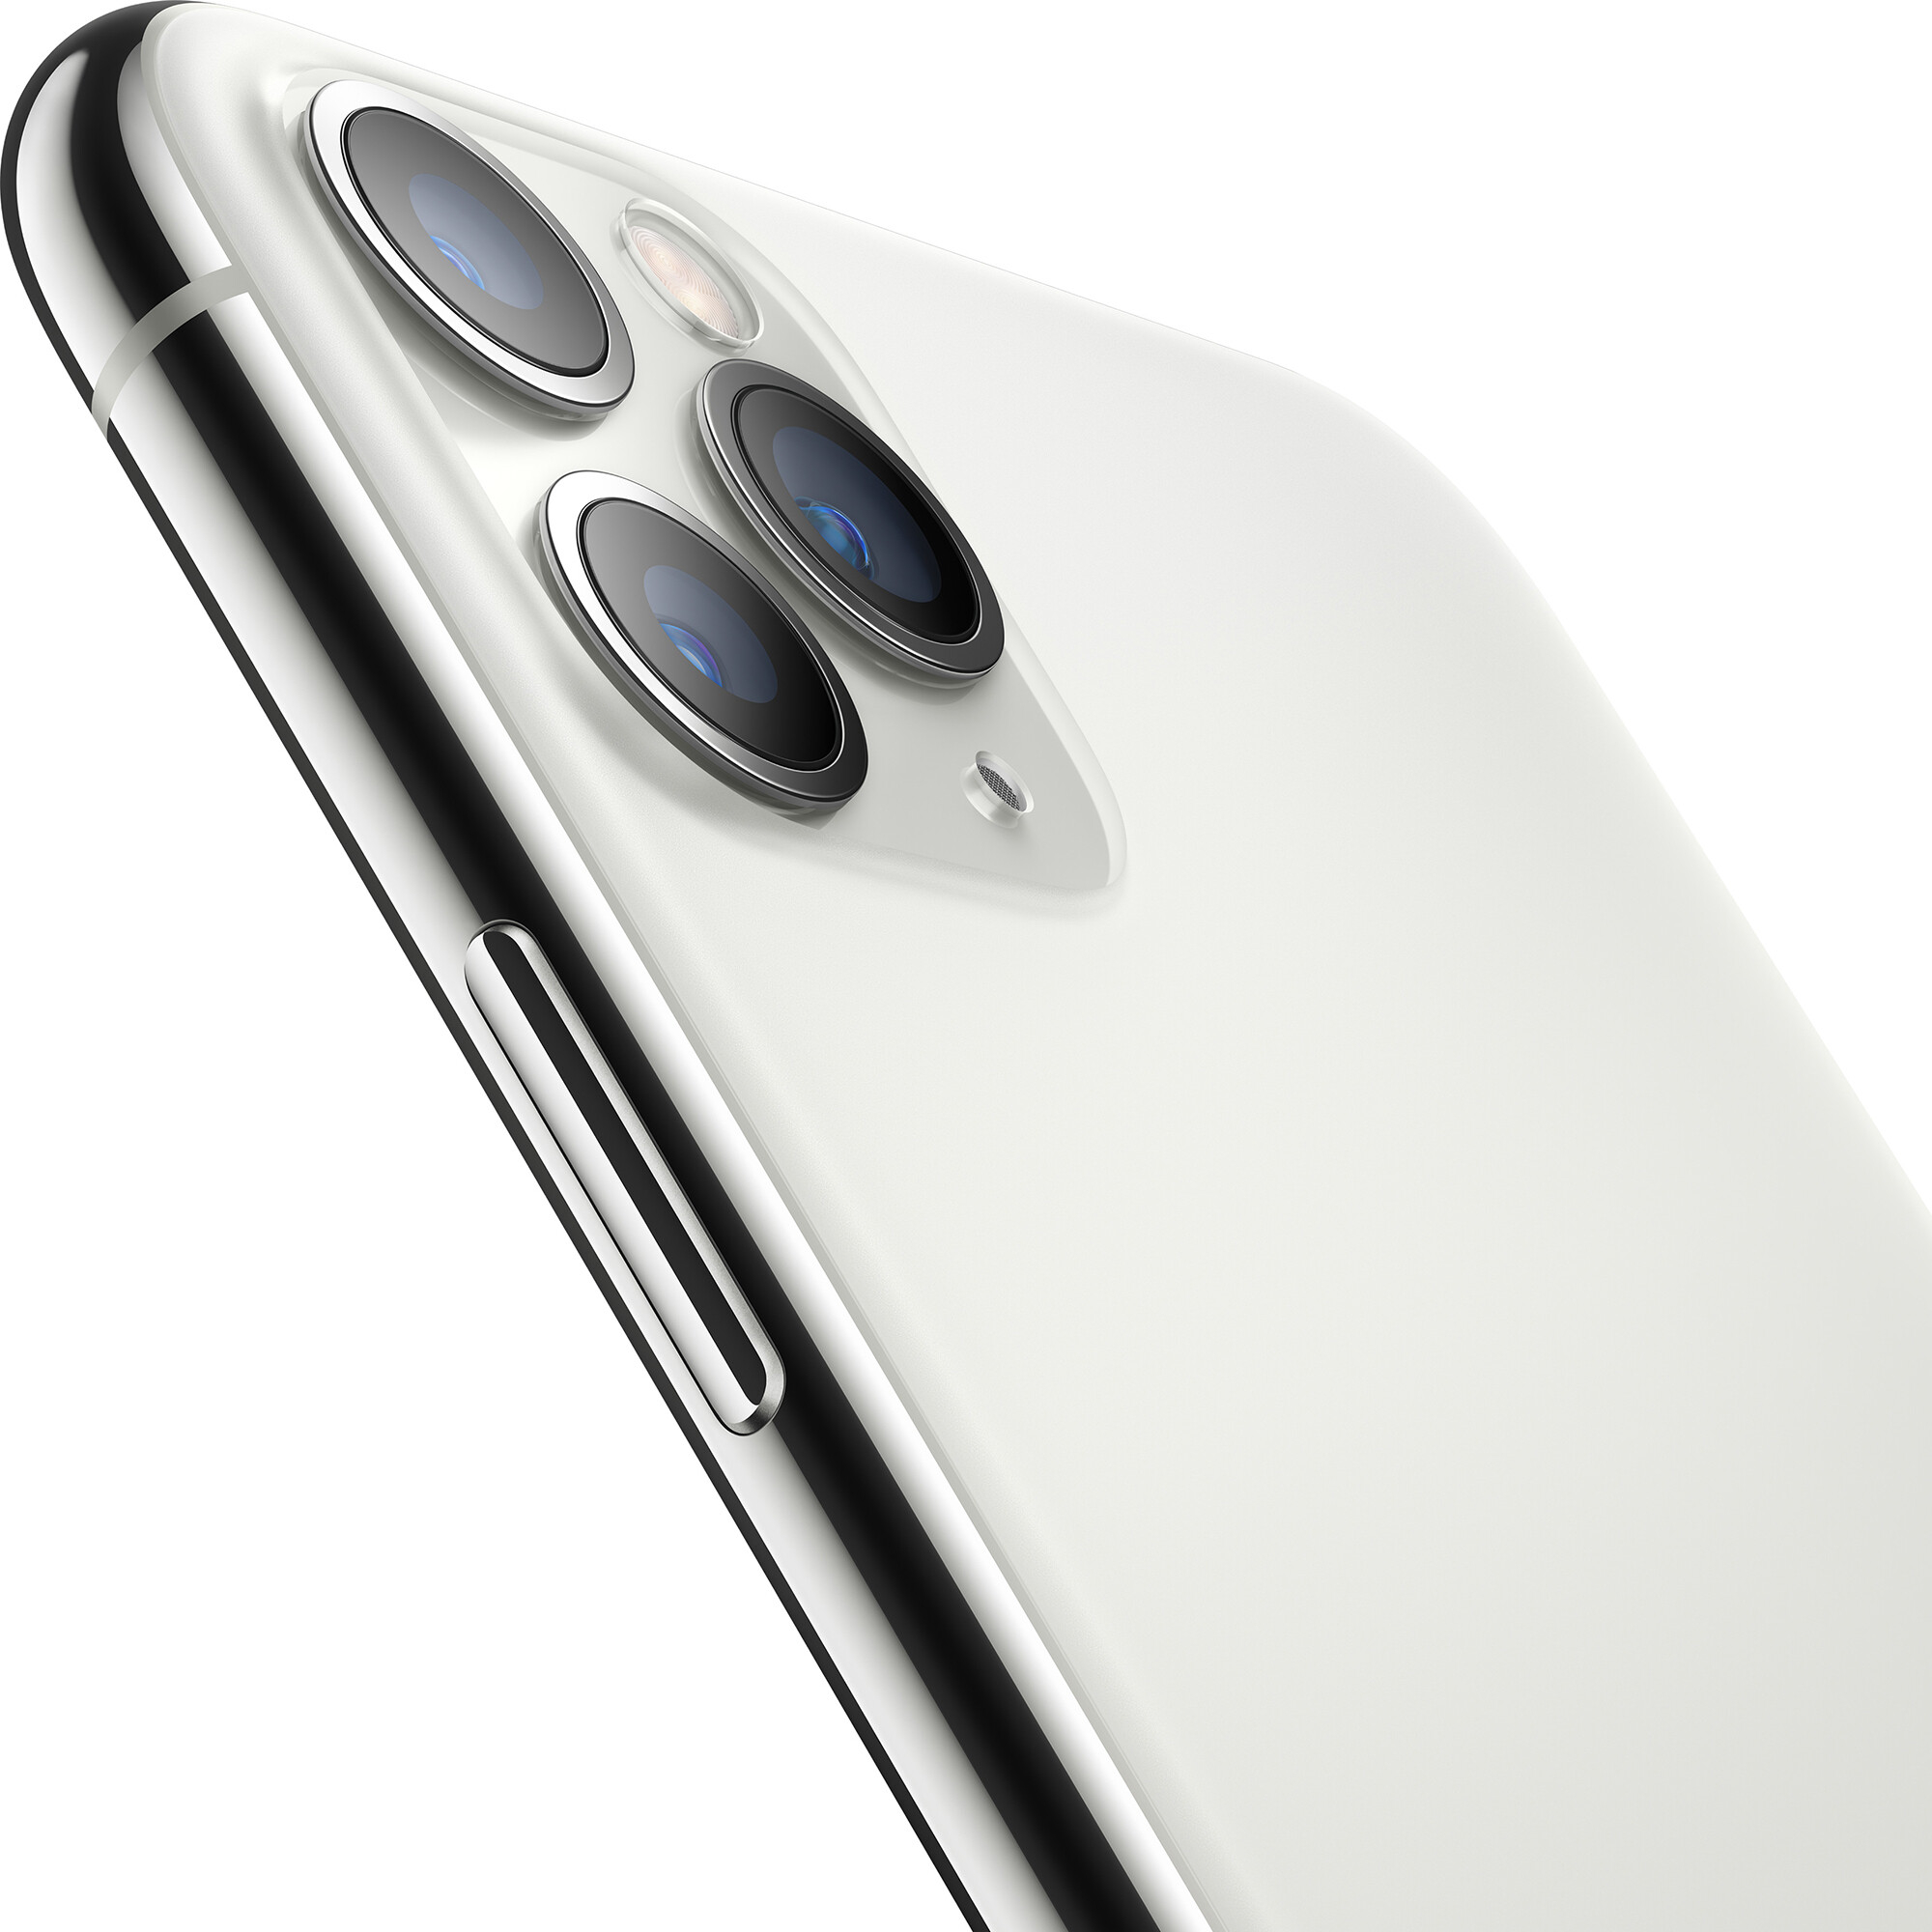  Apple iPhone 11 Pro Max 256GB Silver (MWH52)